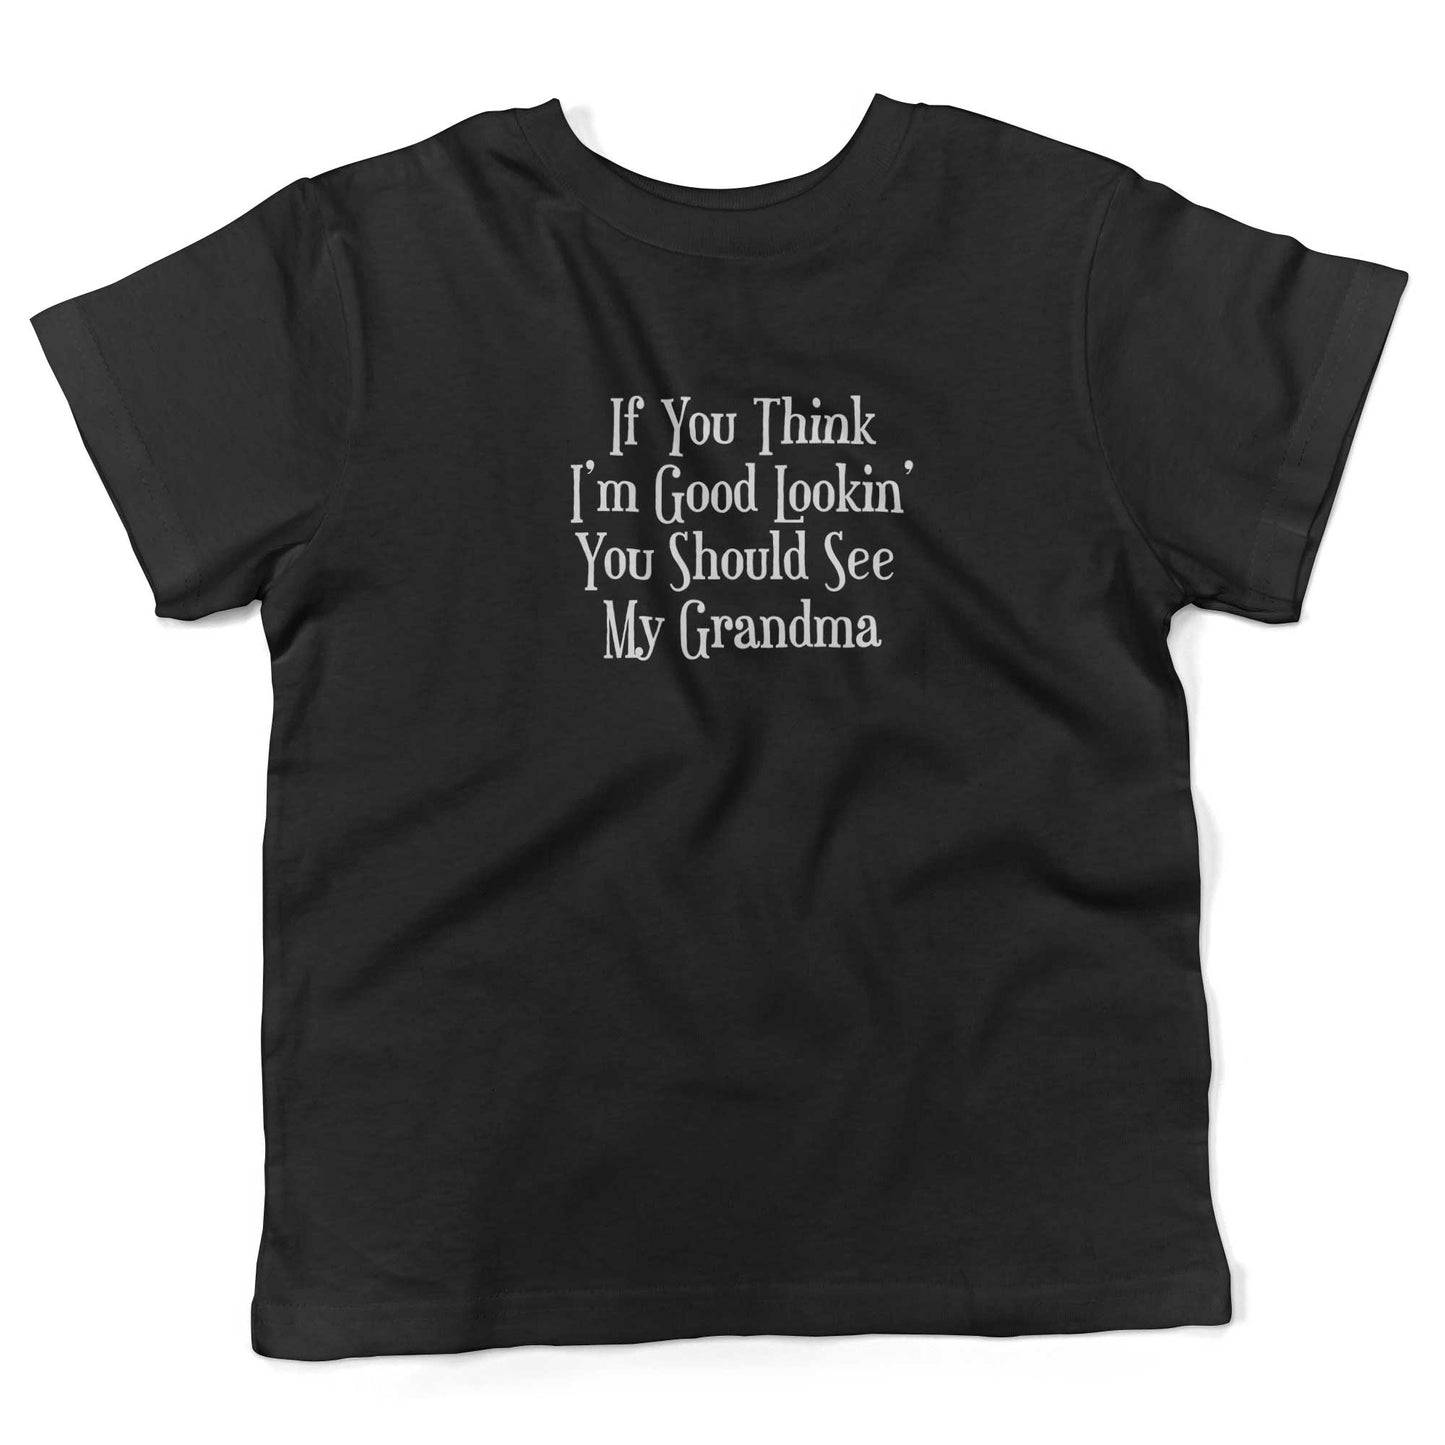 If You Think I'm Good Lookin', You Should See My Grandma Toddler Shirt-Organic Black-2T